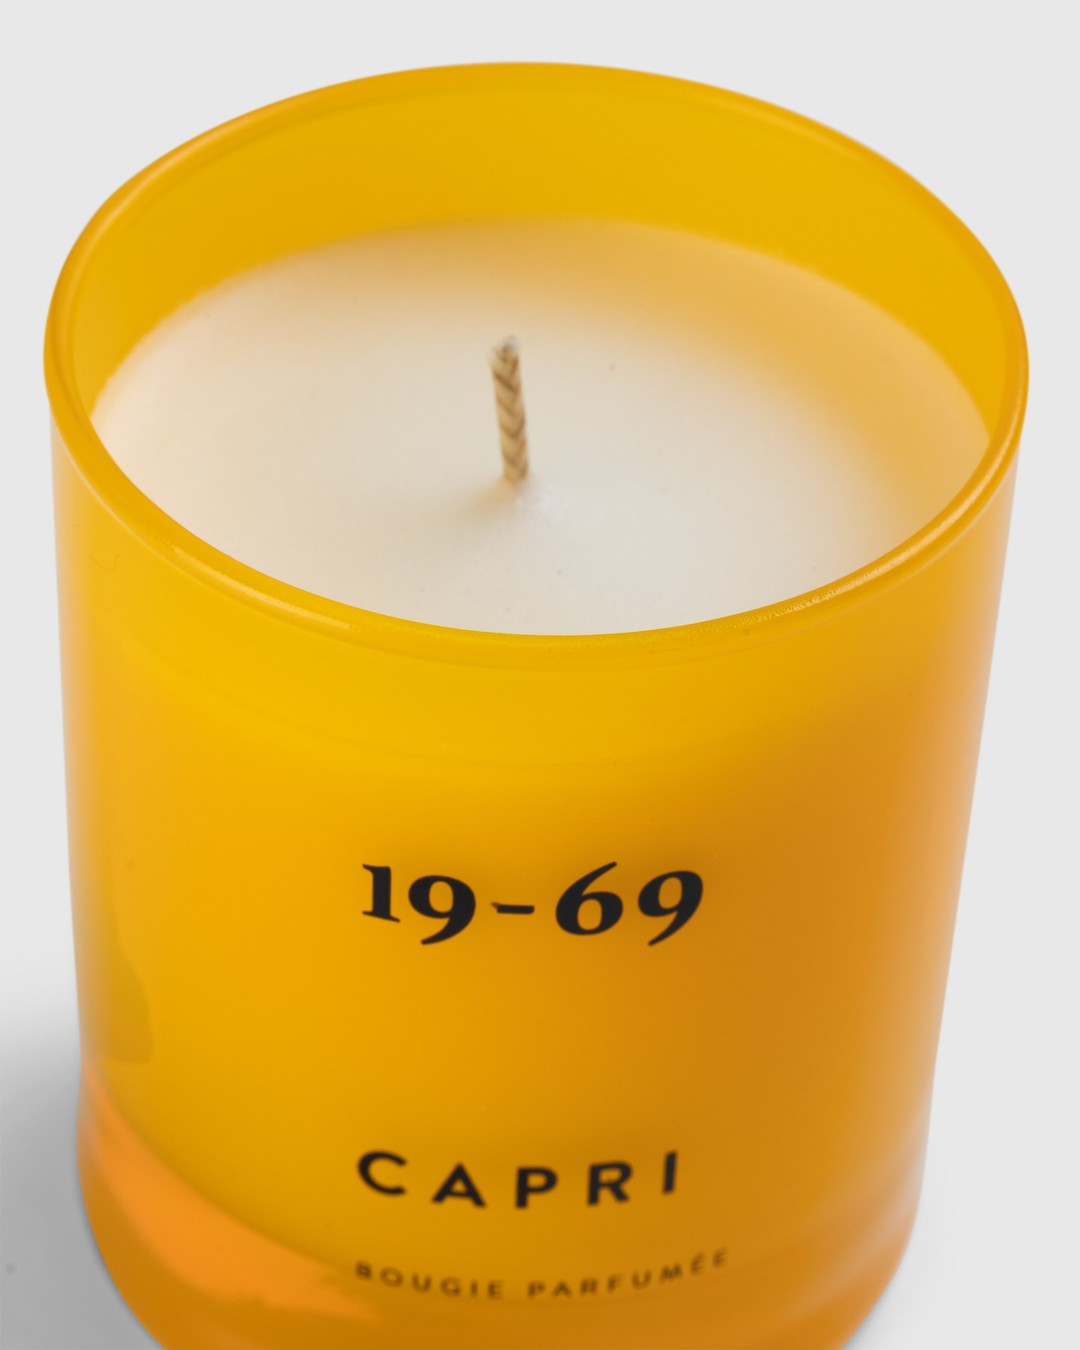 19-69 – Capri BP Candle - Candles - Yellow - Image 3